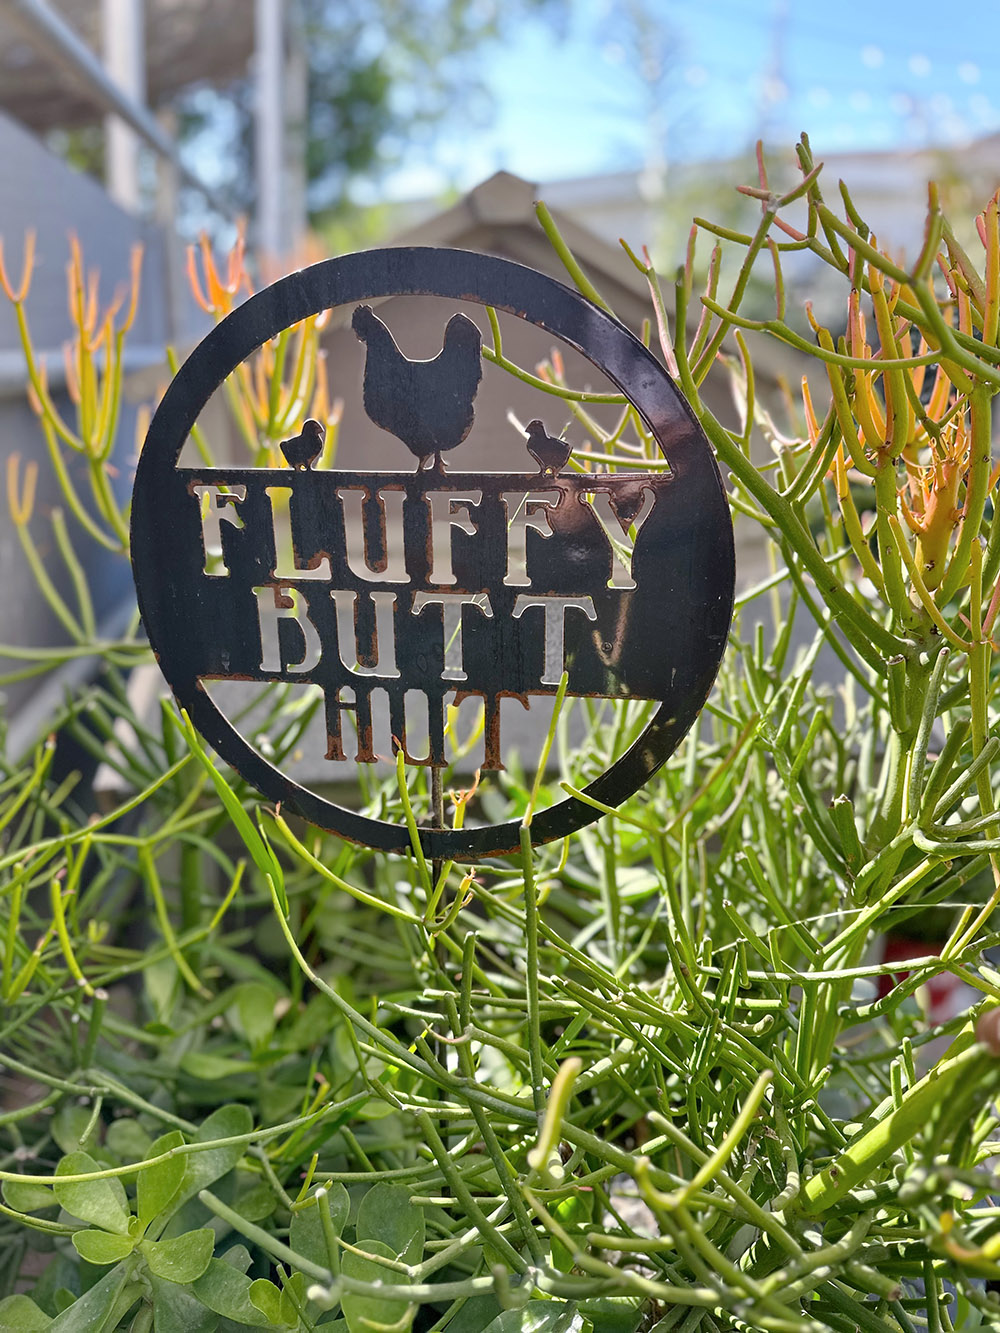 Fluffy butt hut chicken sign